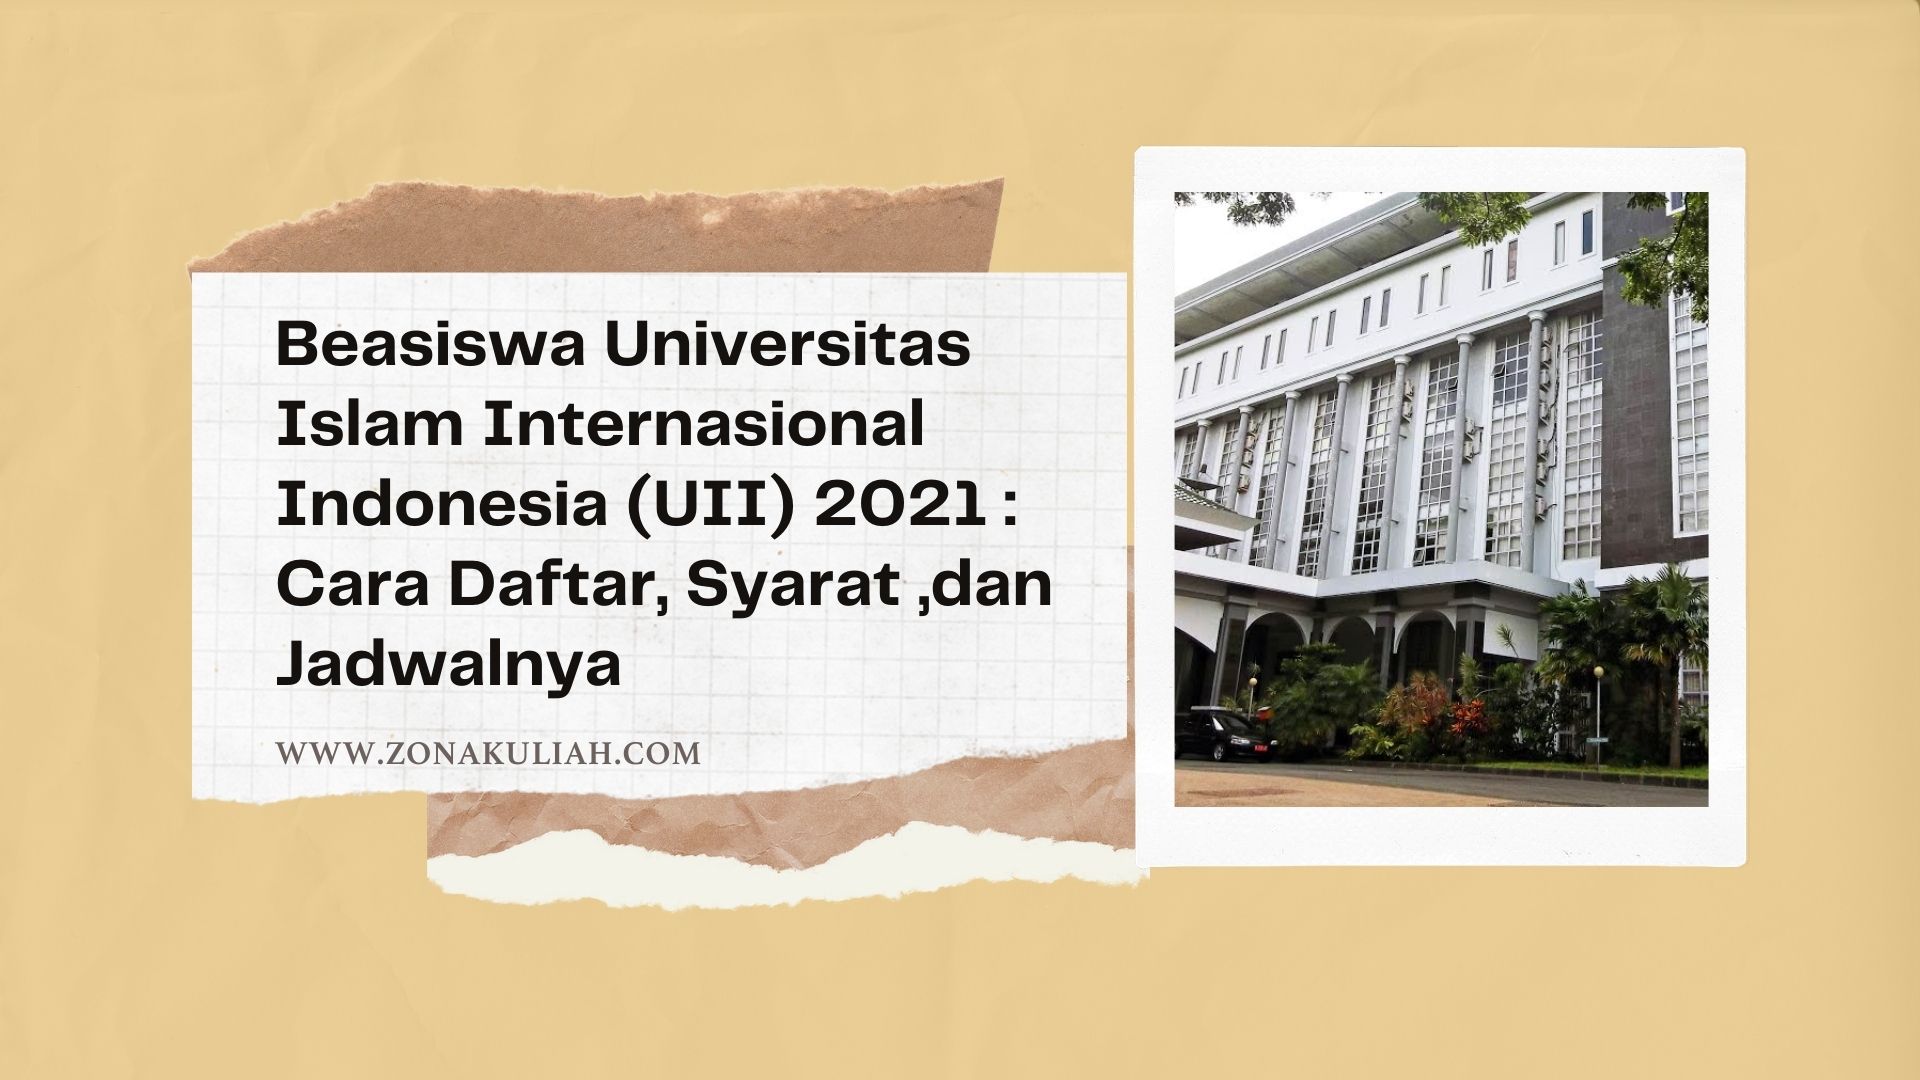 Beasiswa Universitas Islam Internasional Indonesia (UII) 2021 www.zonakuliah.com